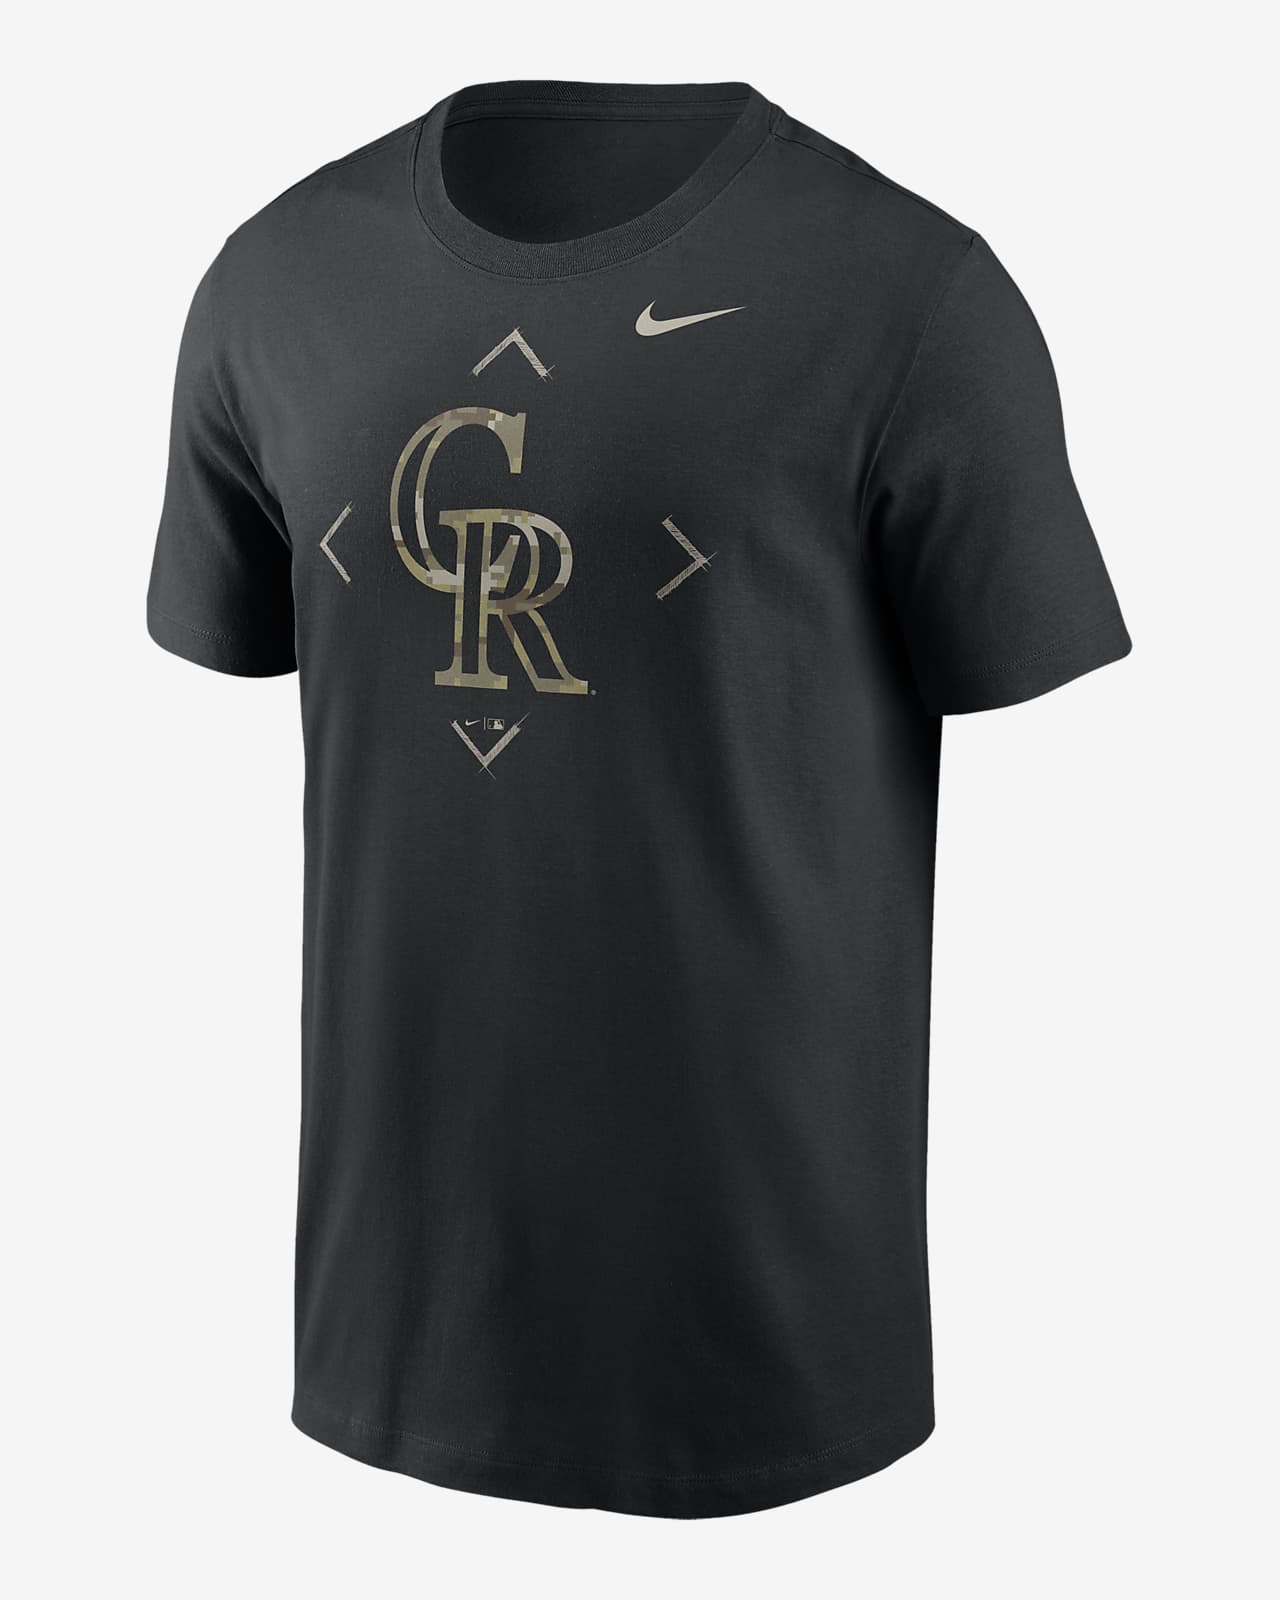 Men's Nike Black Colorado Rockies Camo Logo T-Shirt